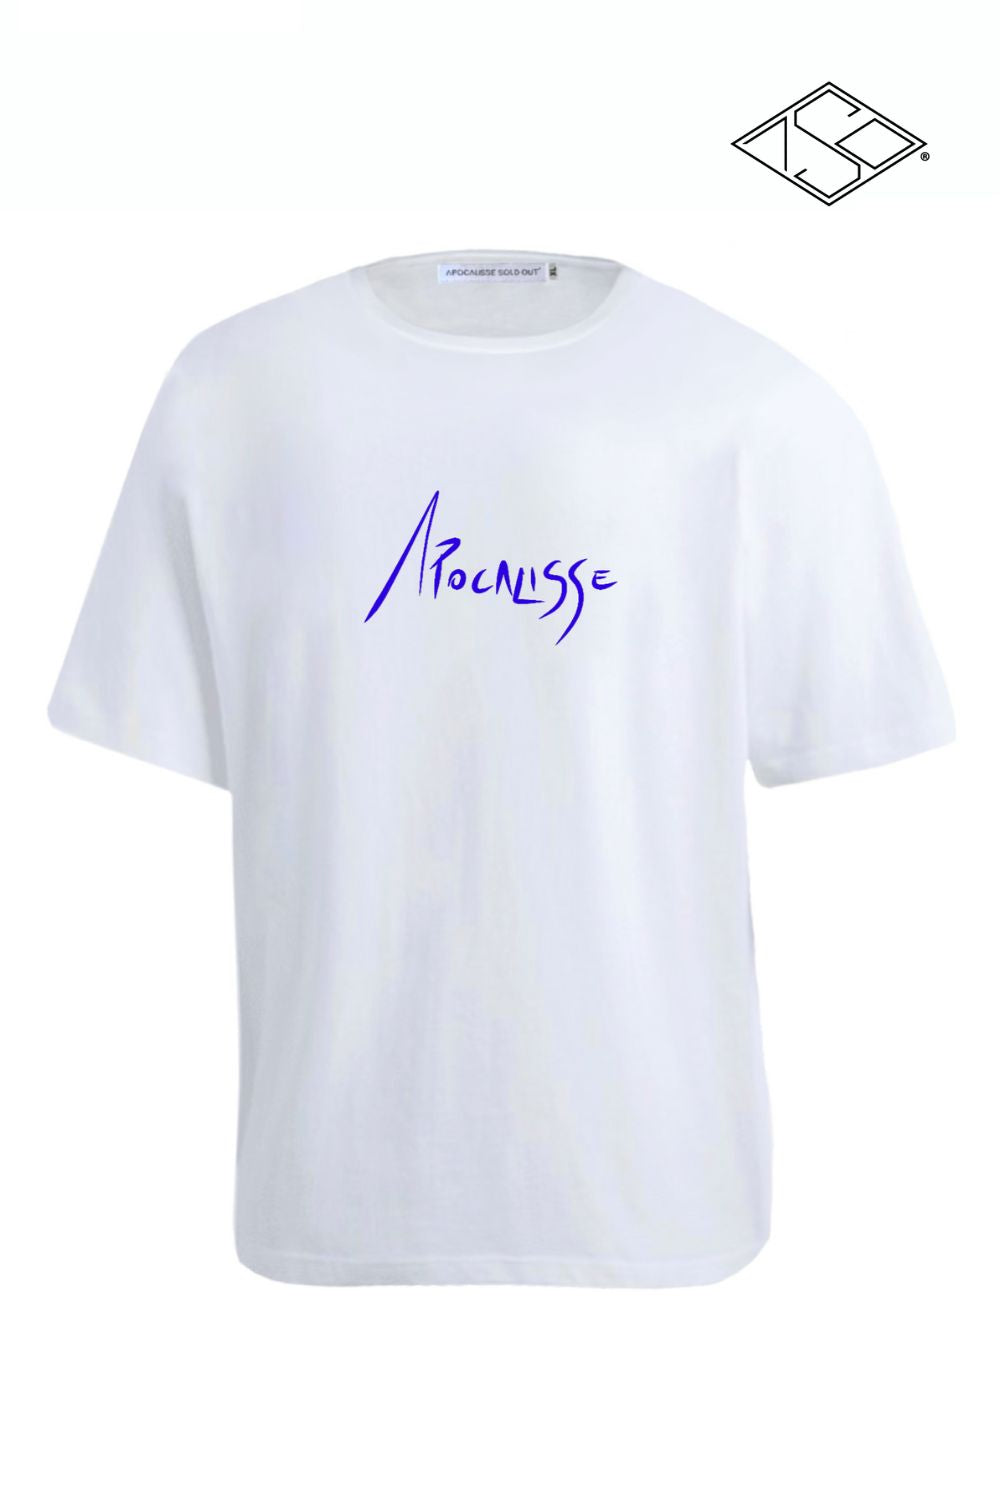 Apocalisse Basic edition blu print white tshirt by ApocalisseSoldOut® Fashion Brand